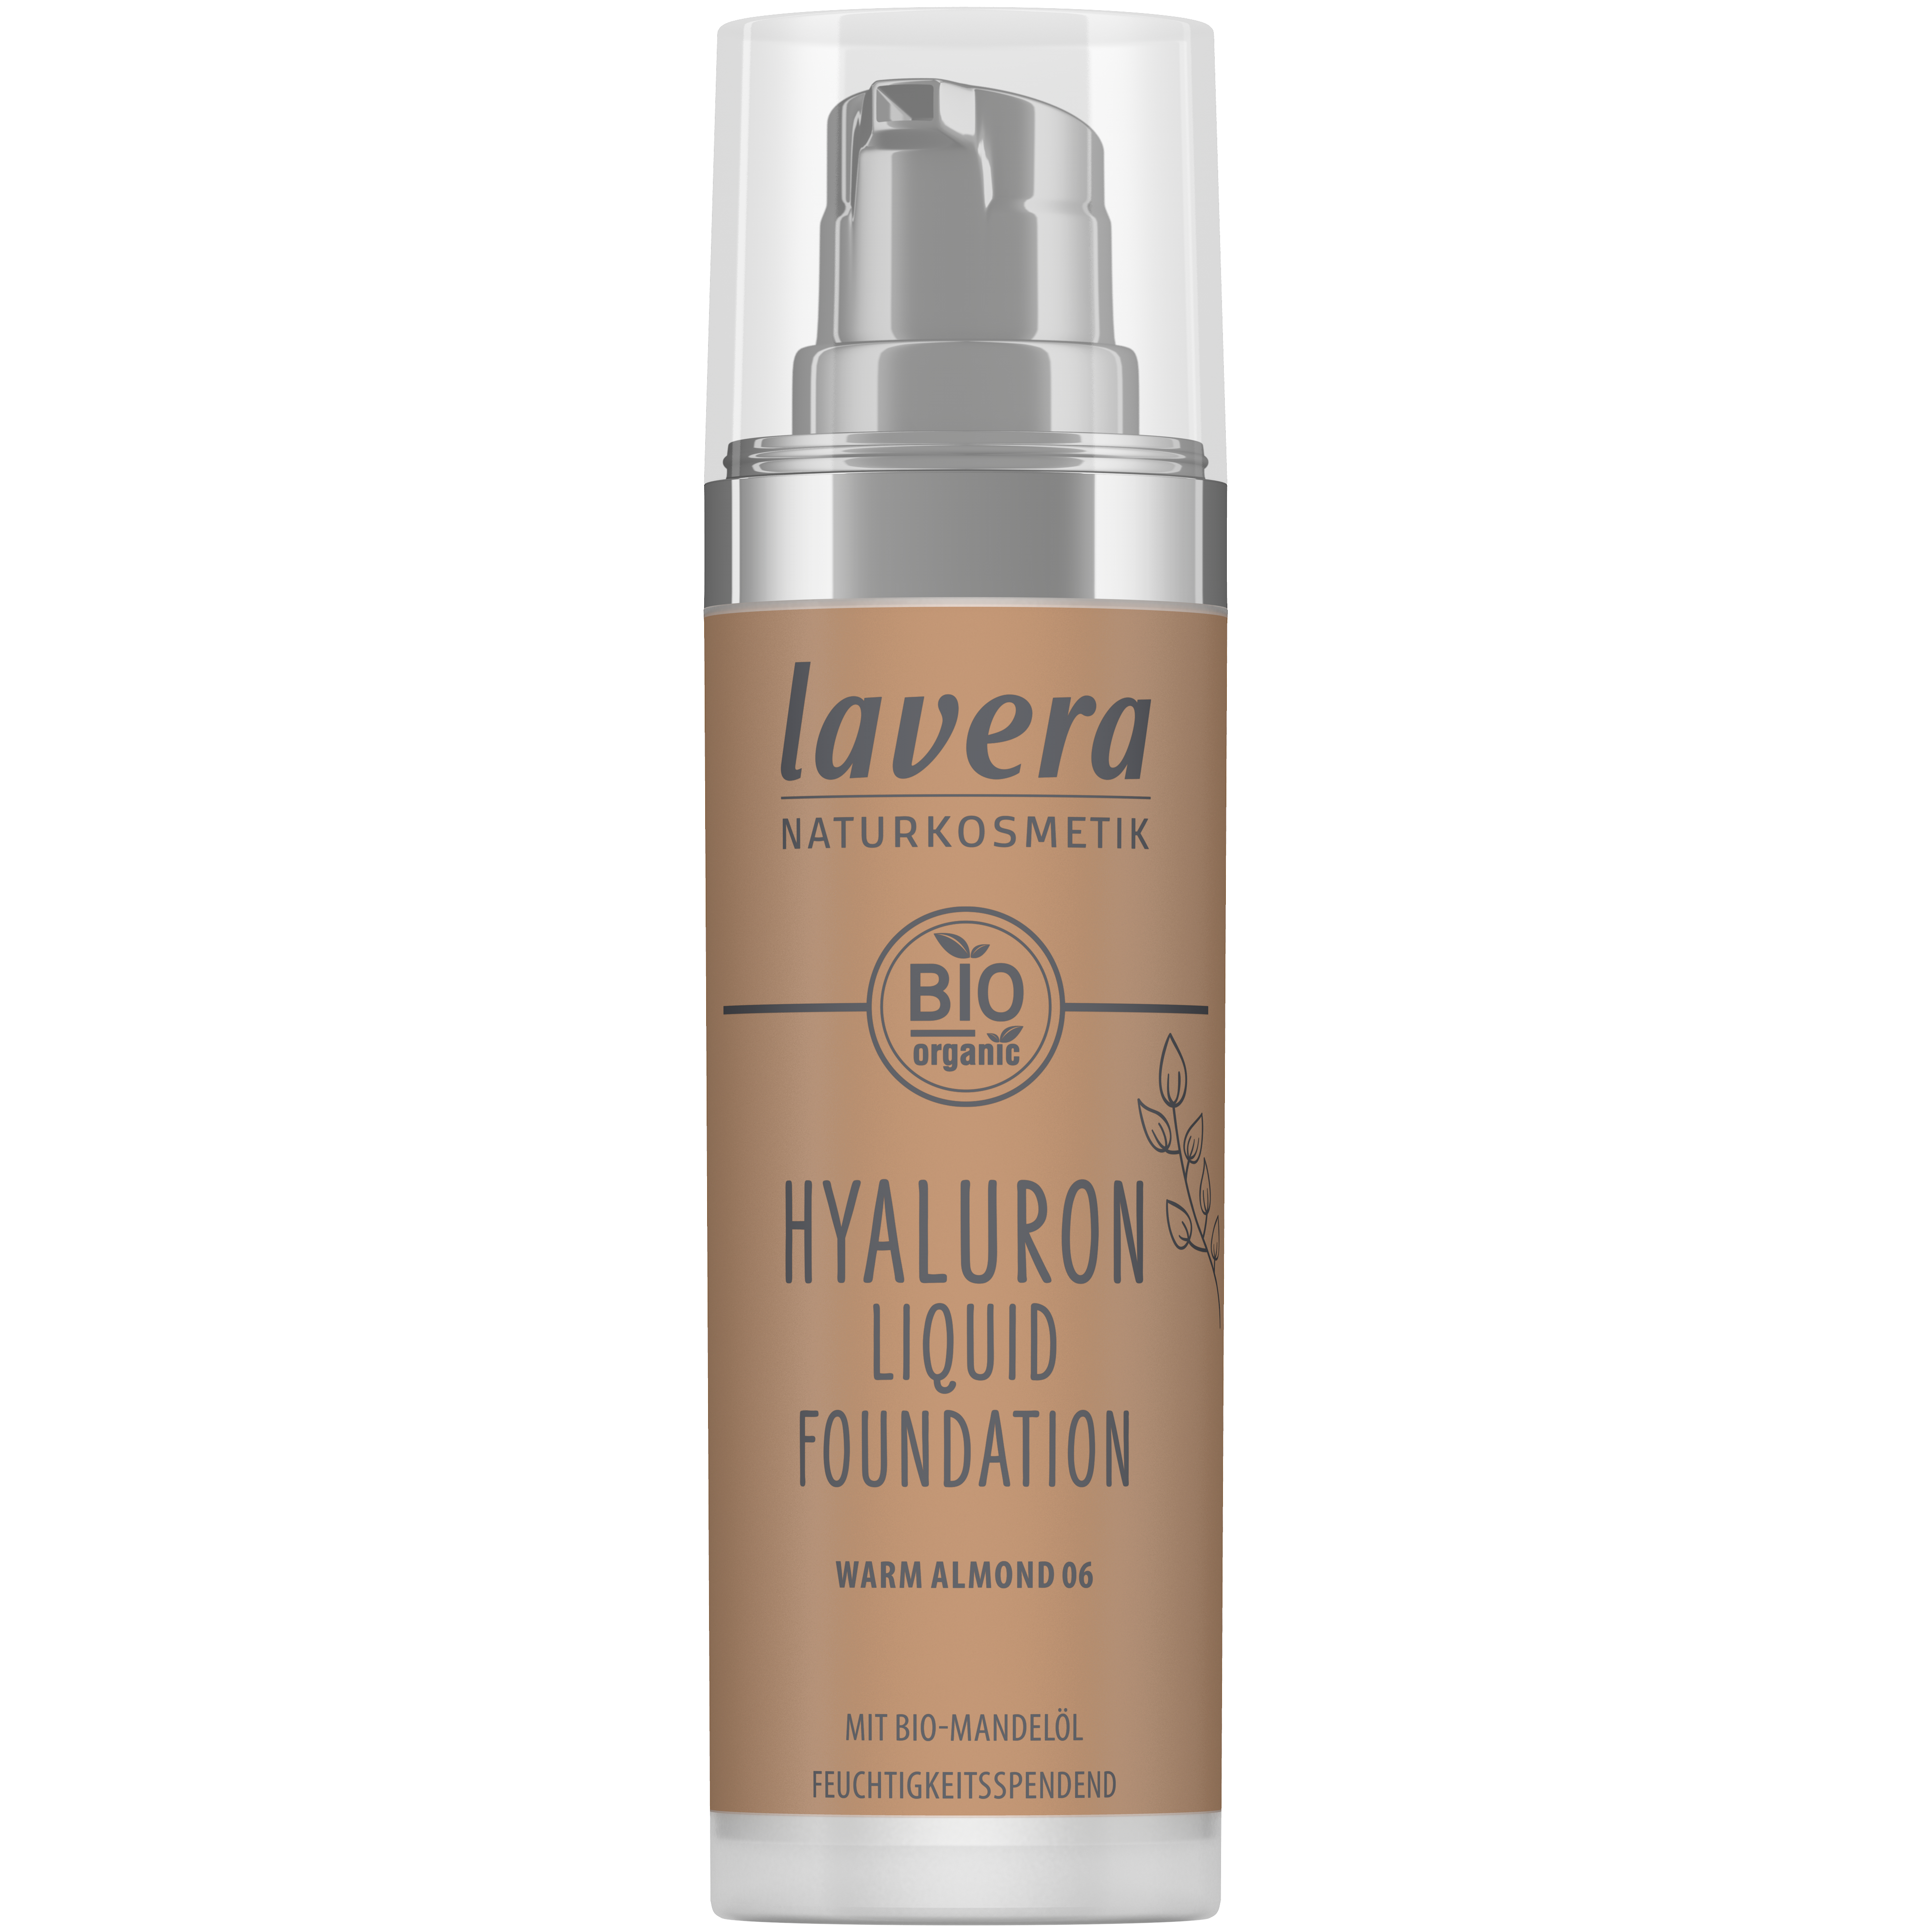 Lavera Hyaluron Liquid Foundation -Warm Almond 06